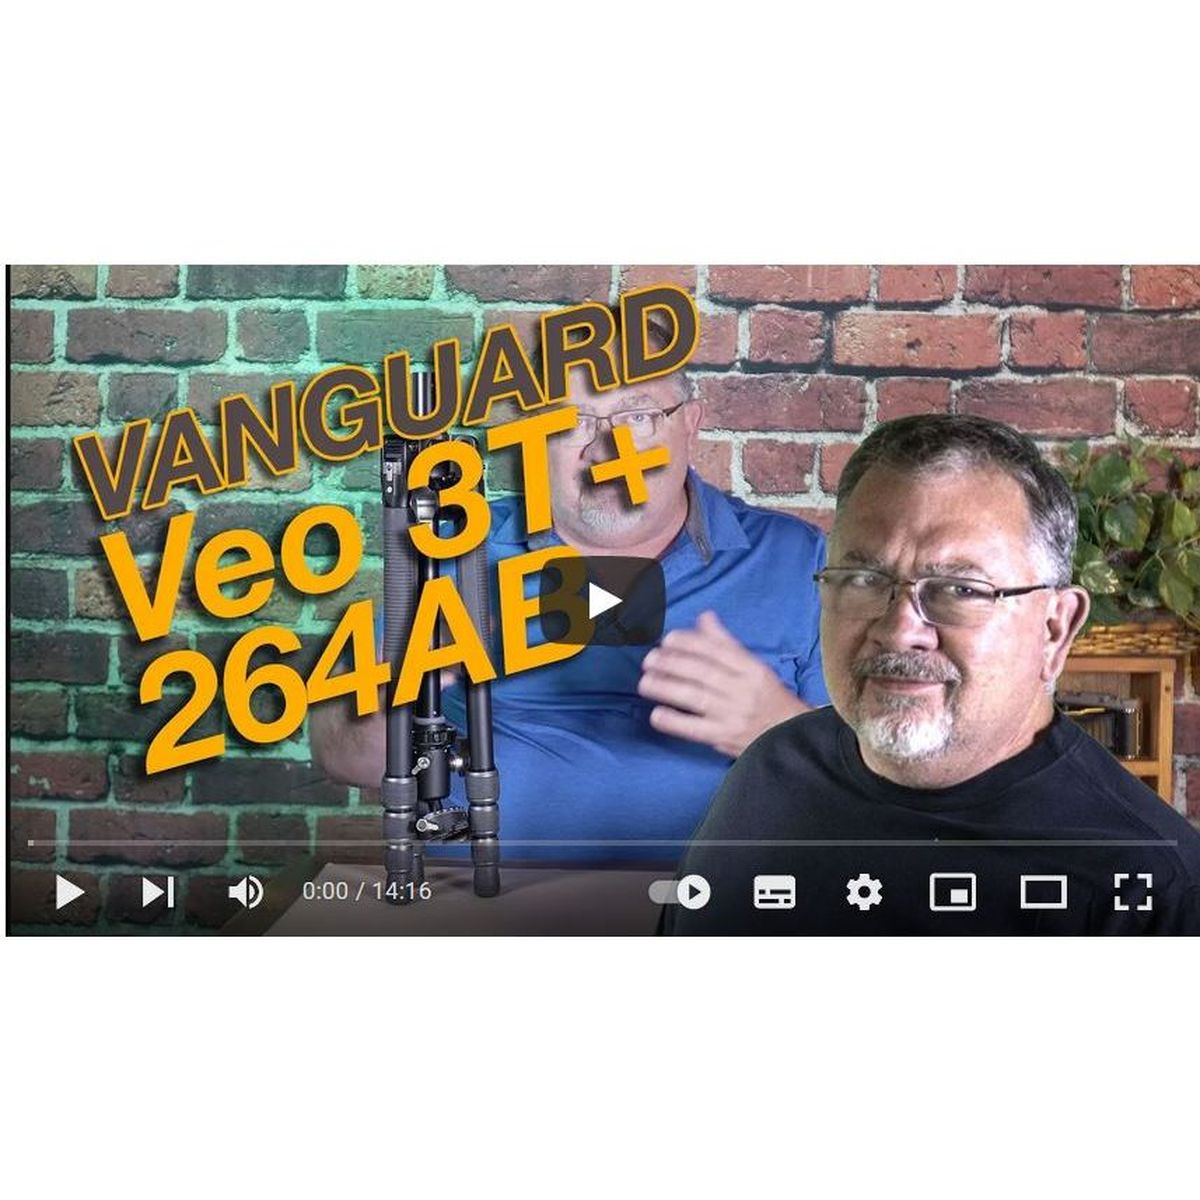 Vanguard VEO3T+ 264AB 